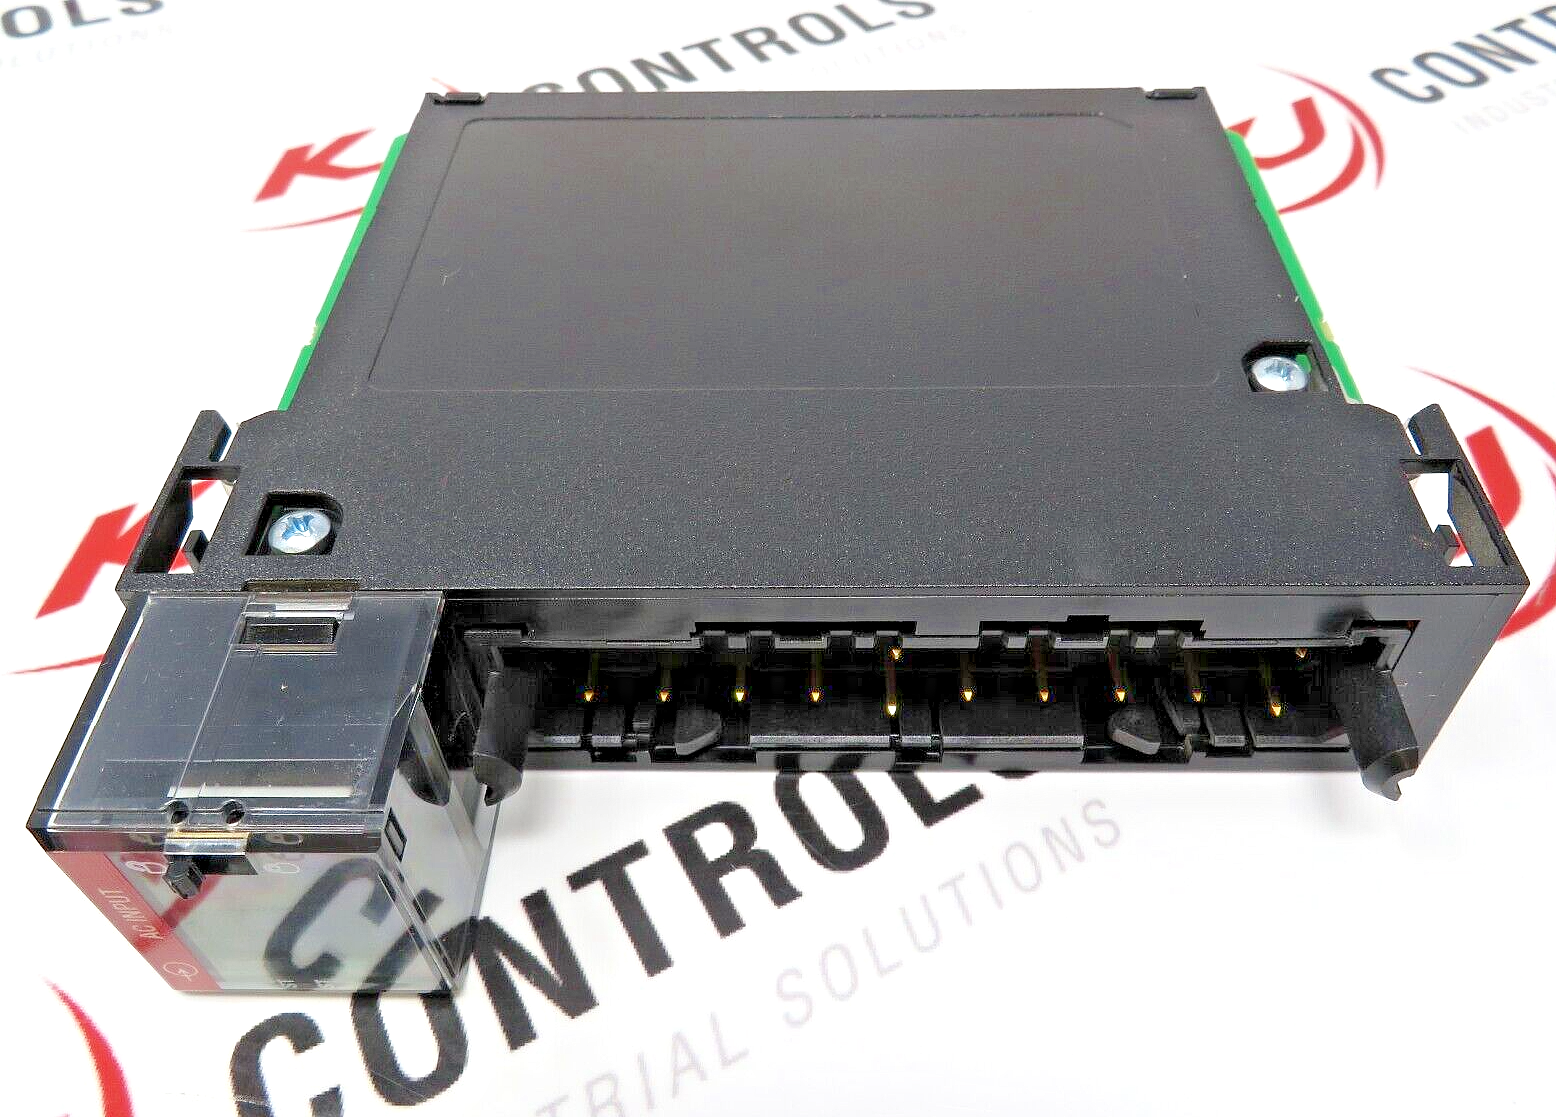 Allen-Bradley 1756-IA16 ControlLogix 16-Discrete Input Channels 120V AC Module